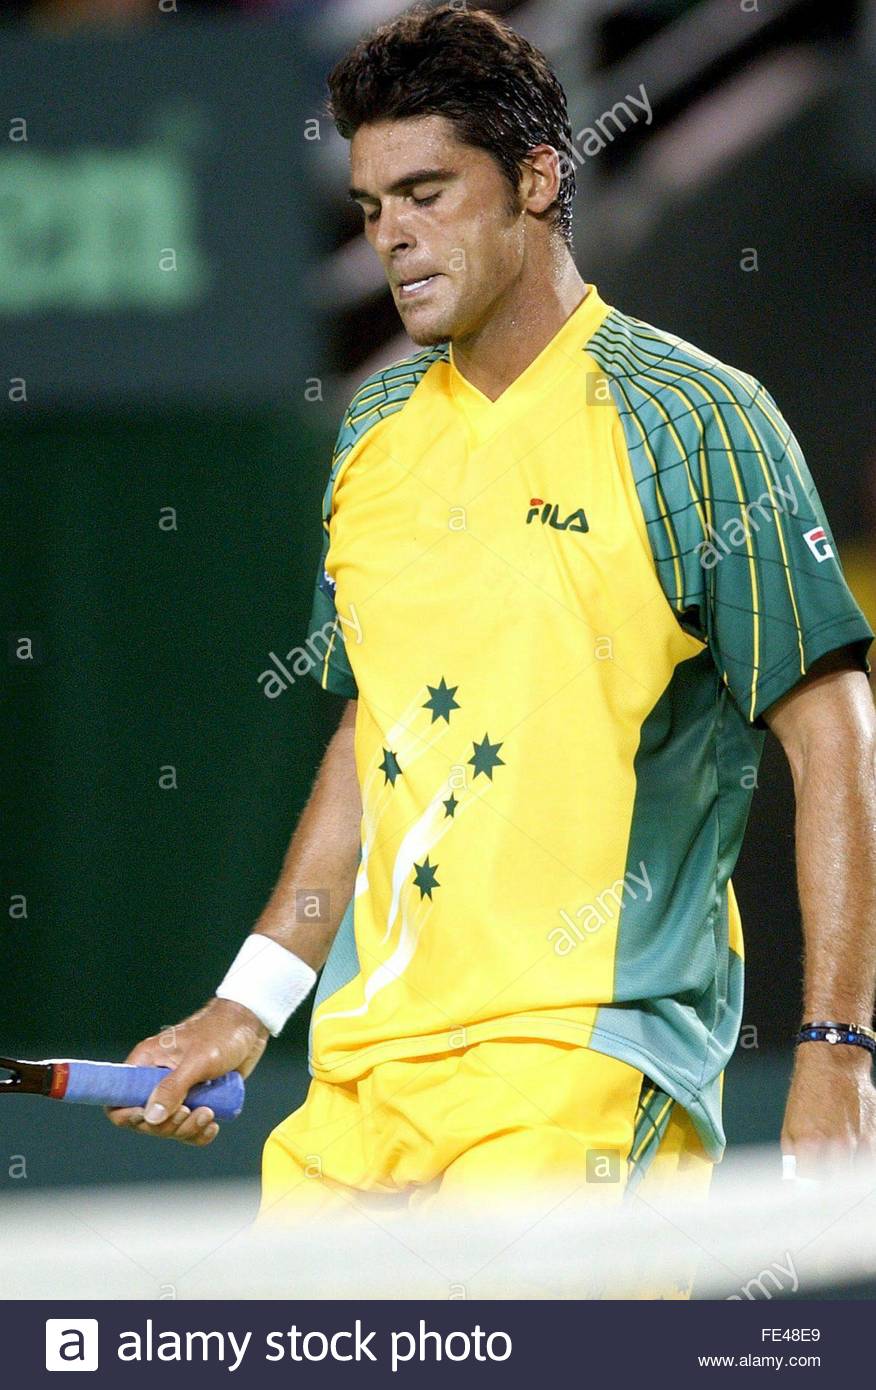 australian-tennis-player-mark-philippoussis-shows-the-strain-during-FE48E9.jpg